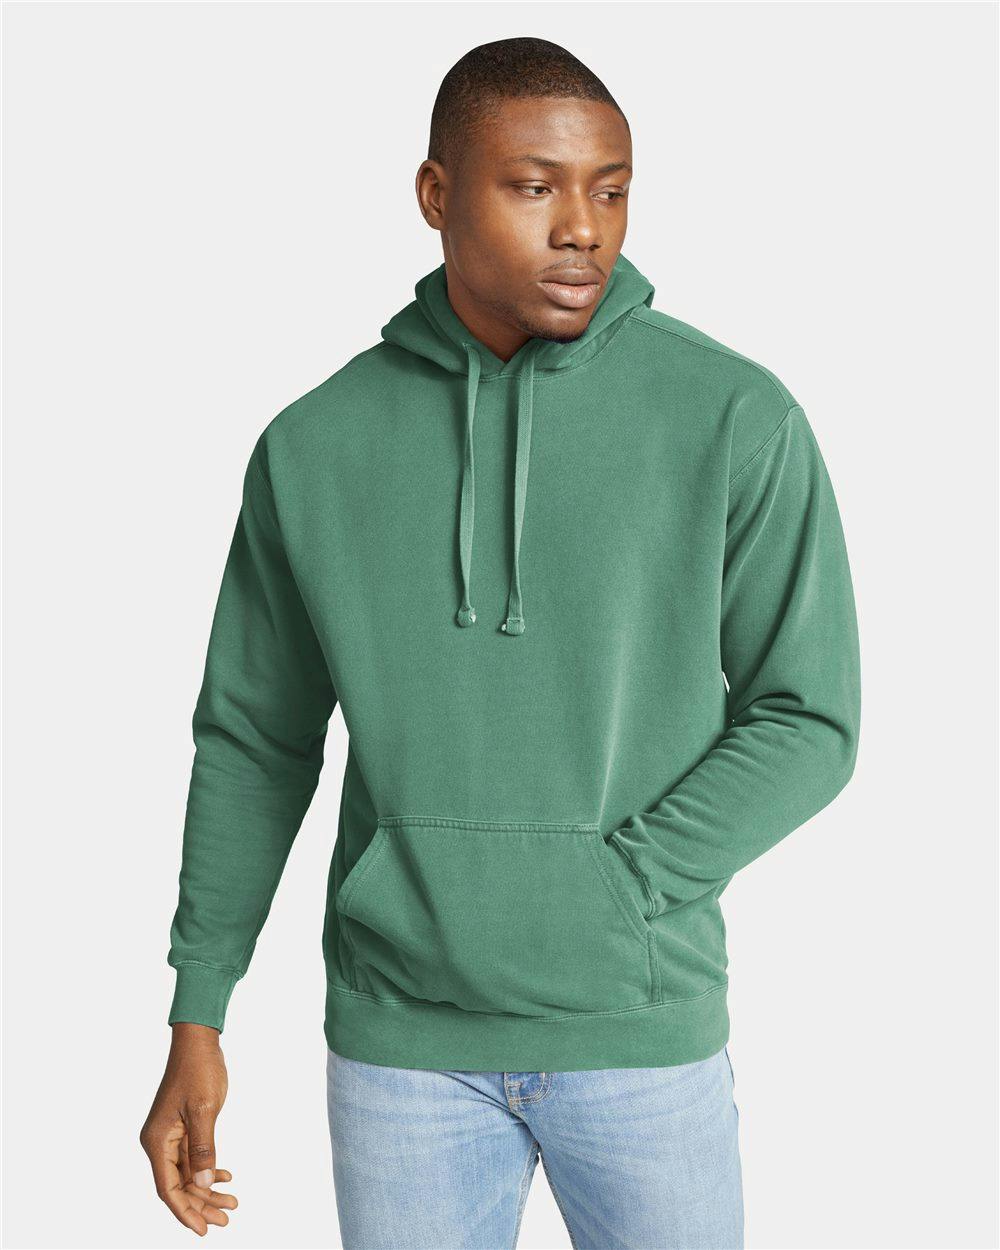 Image for Garment-Dyed Hooded Sweatshirt - 1567